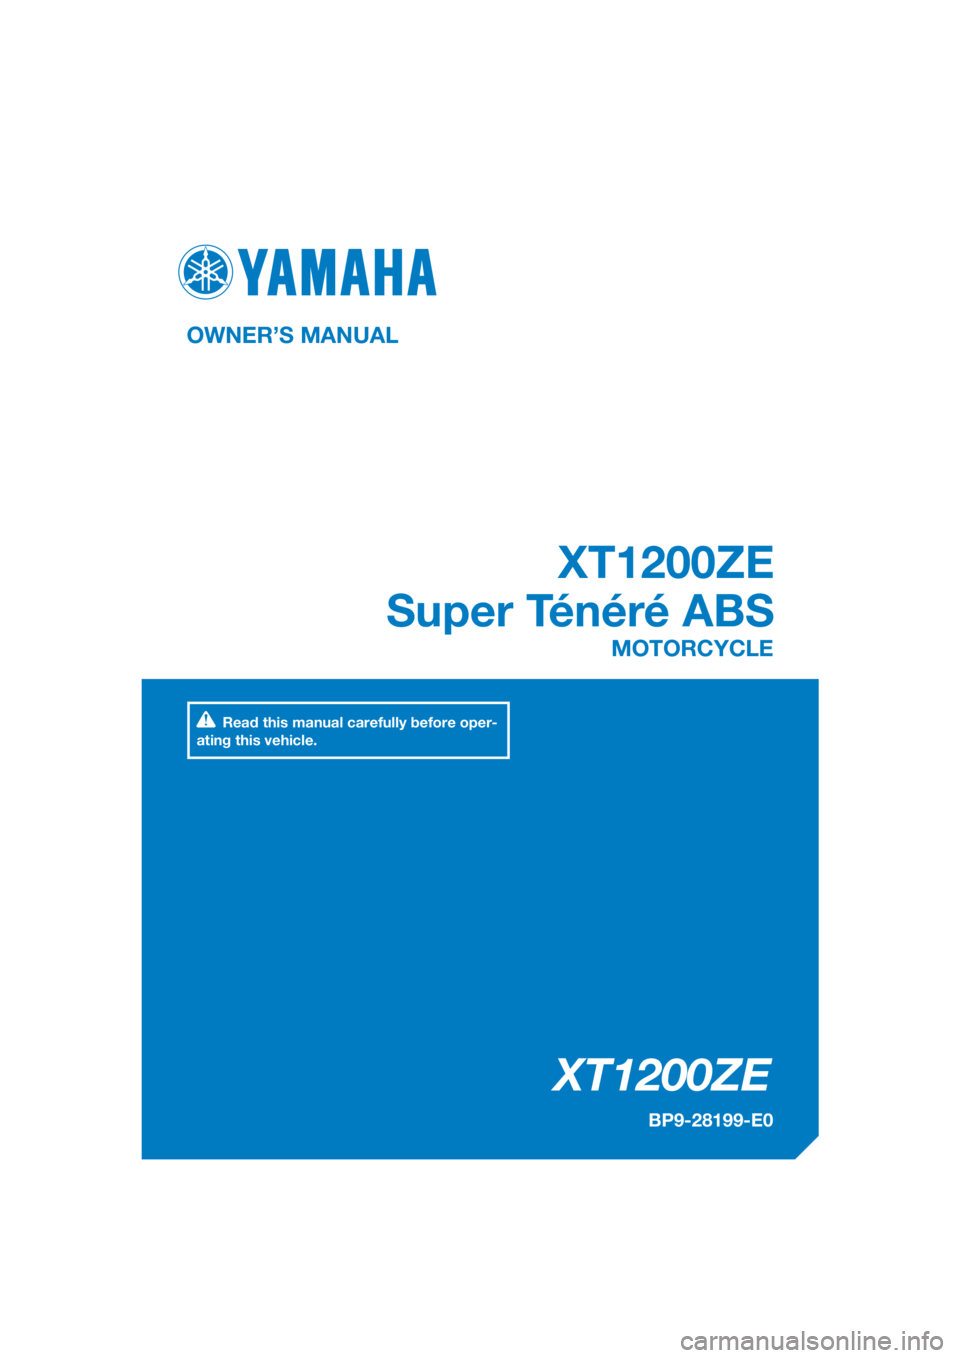 YAMAHA XT1200ZE 2017  Owners Manual DIC183
XT1200ZE
XT1200ZE
Super Ténéré ABS
OWNER’S MANUAL
BP9-28199-E0
MOTORCYCLE
[English  (E)]
Read this manual carefully before oper-
ating this vehicle. 